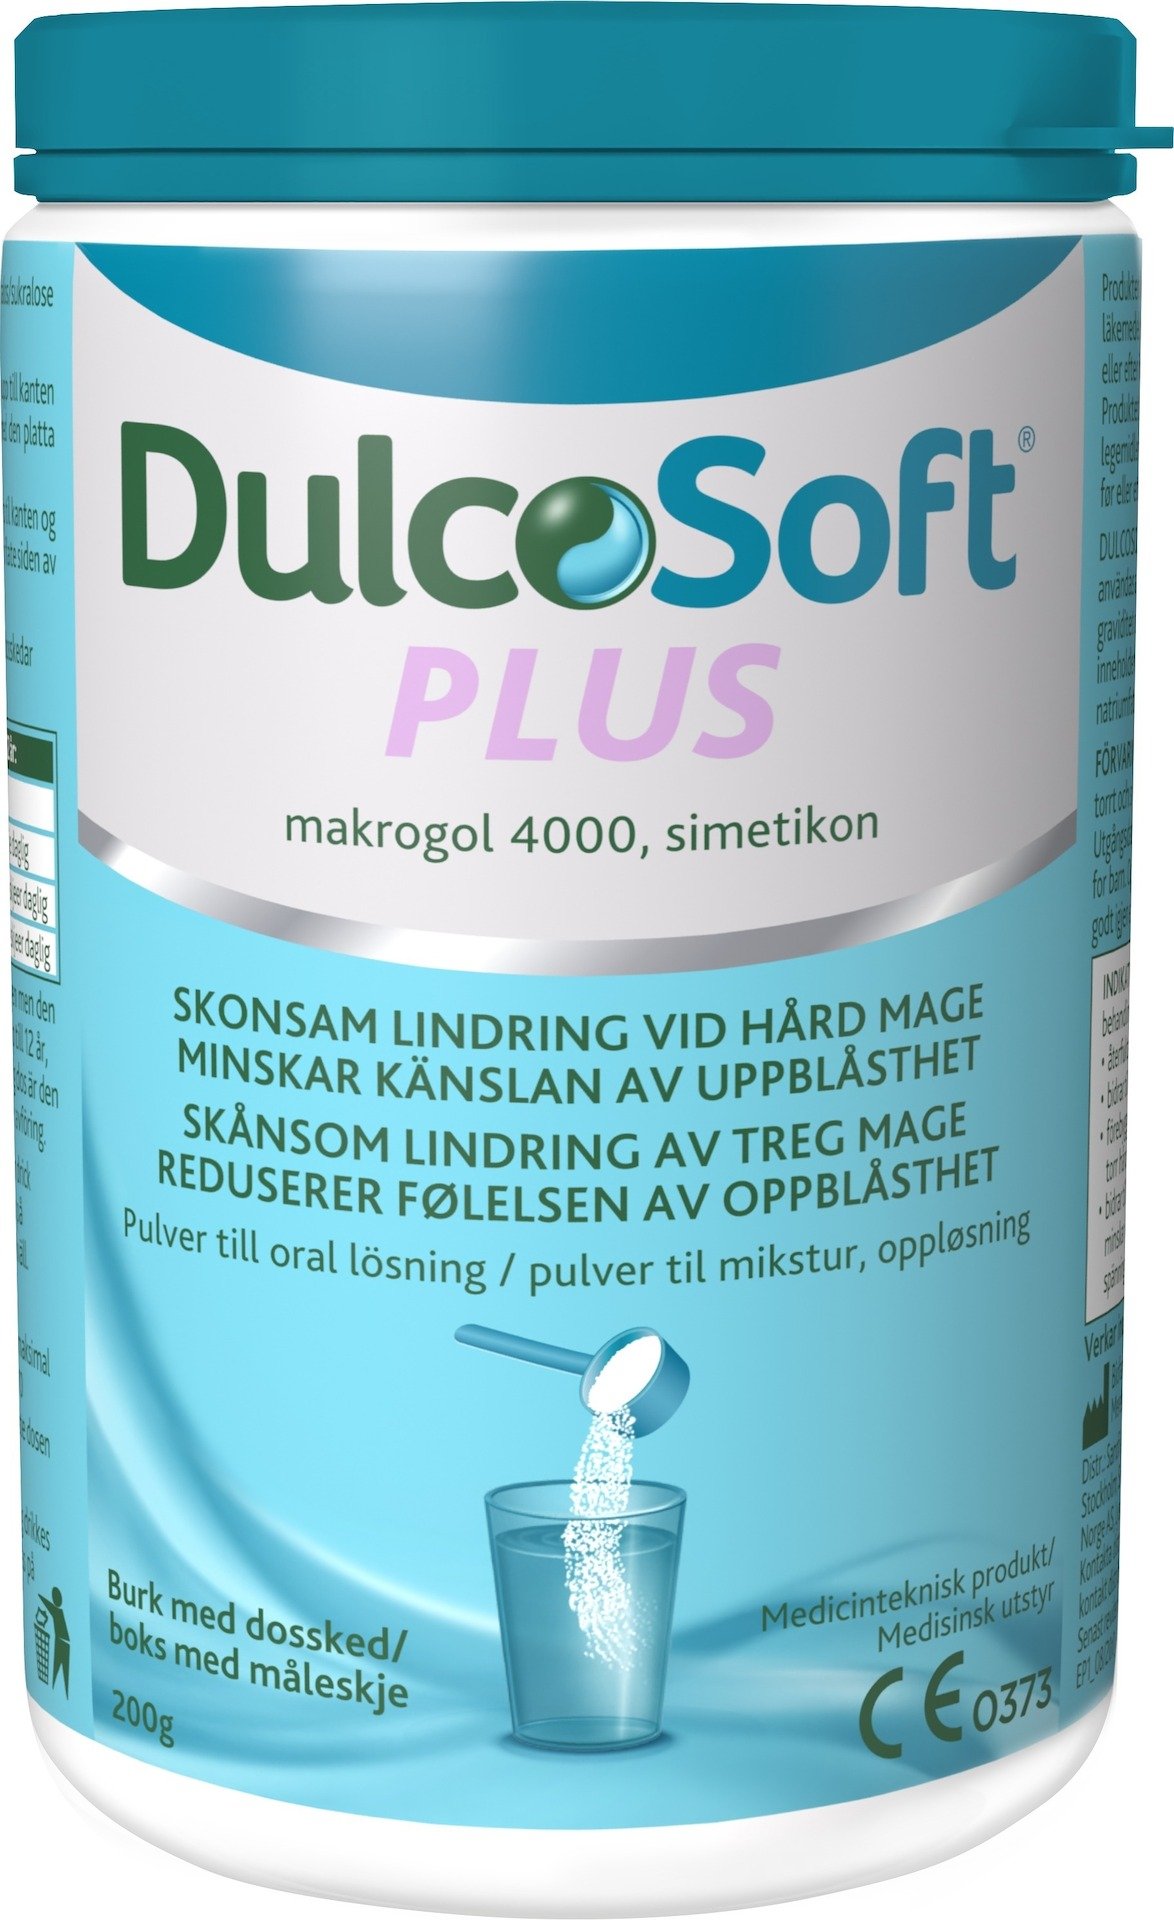 DulcoSoft Plus Makrogol 4000 & Simetikon 200g